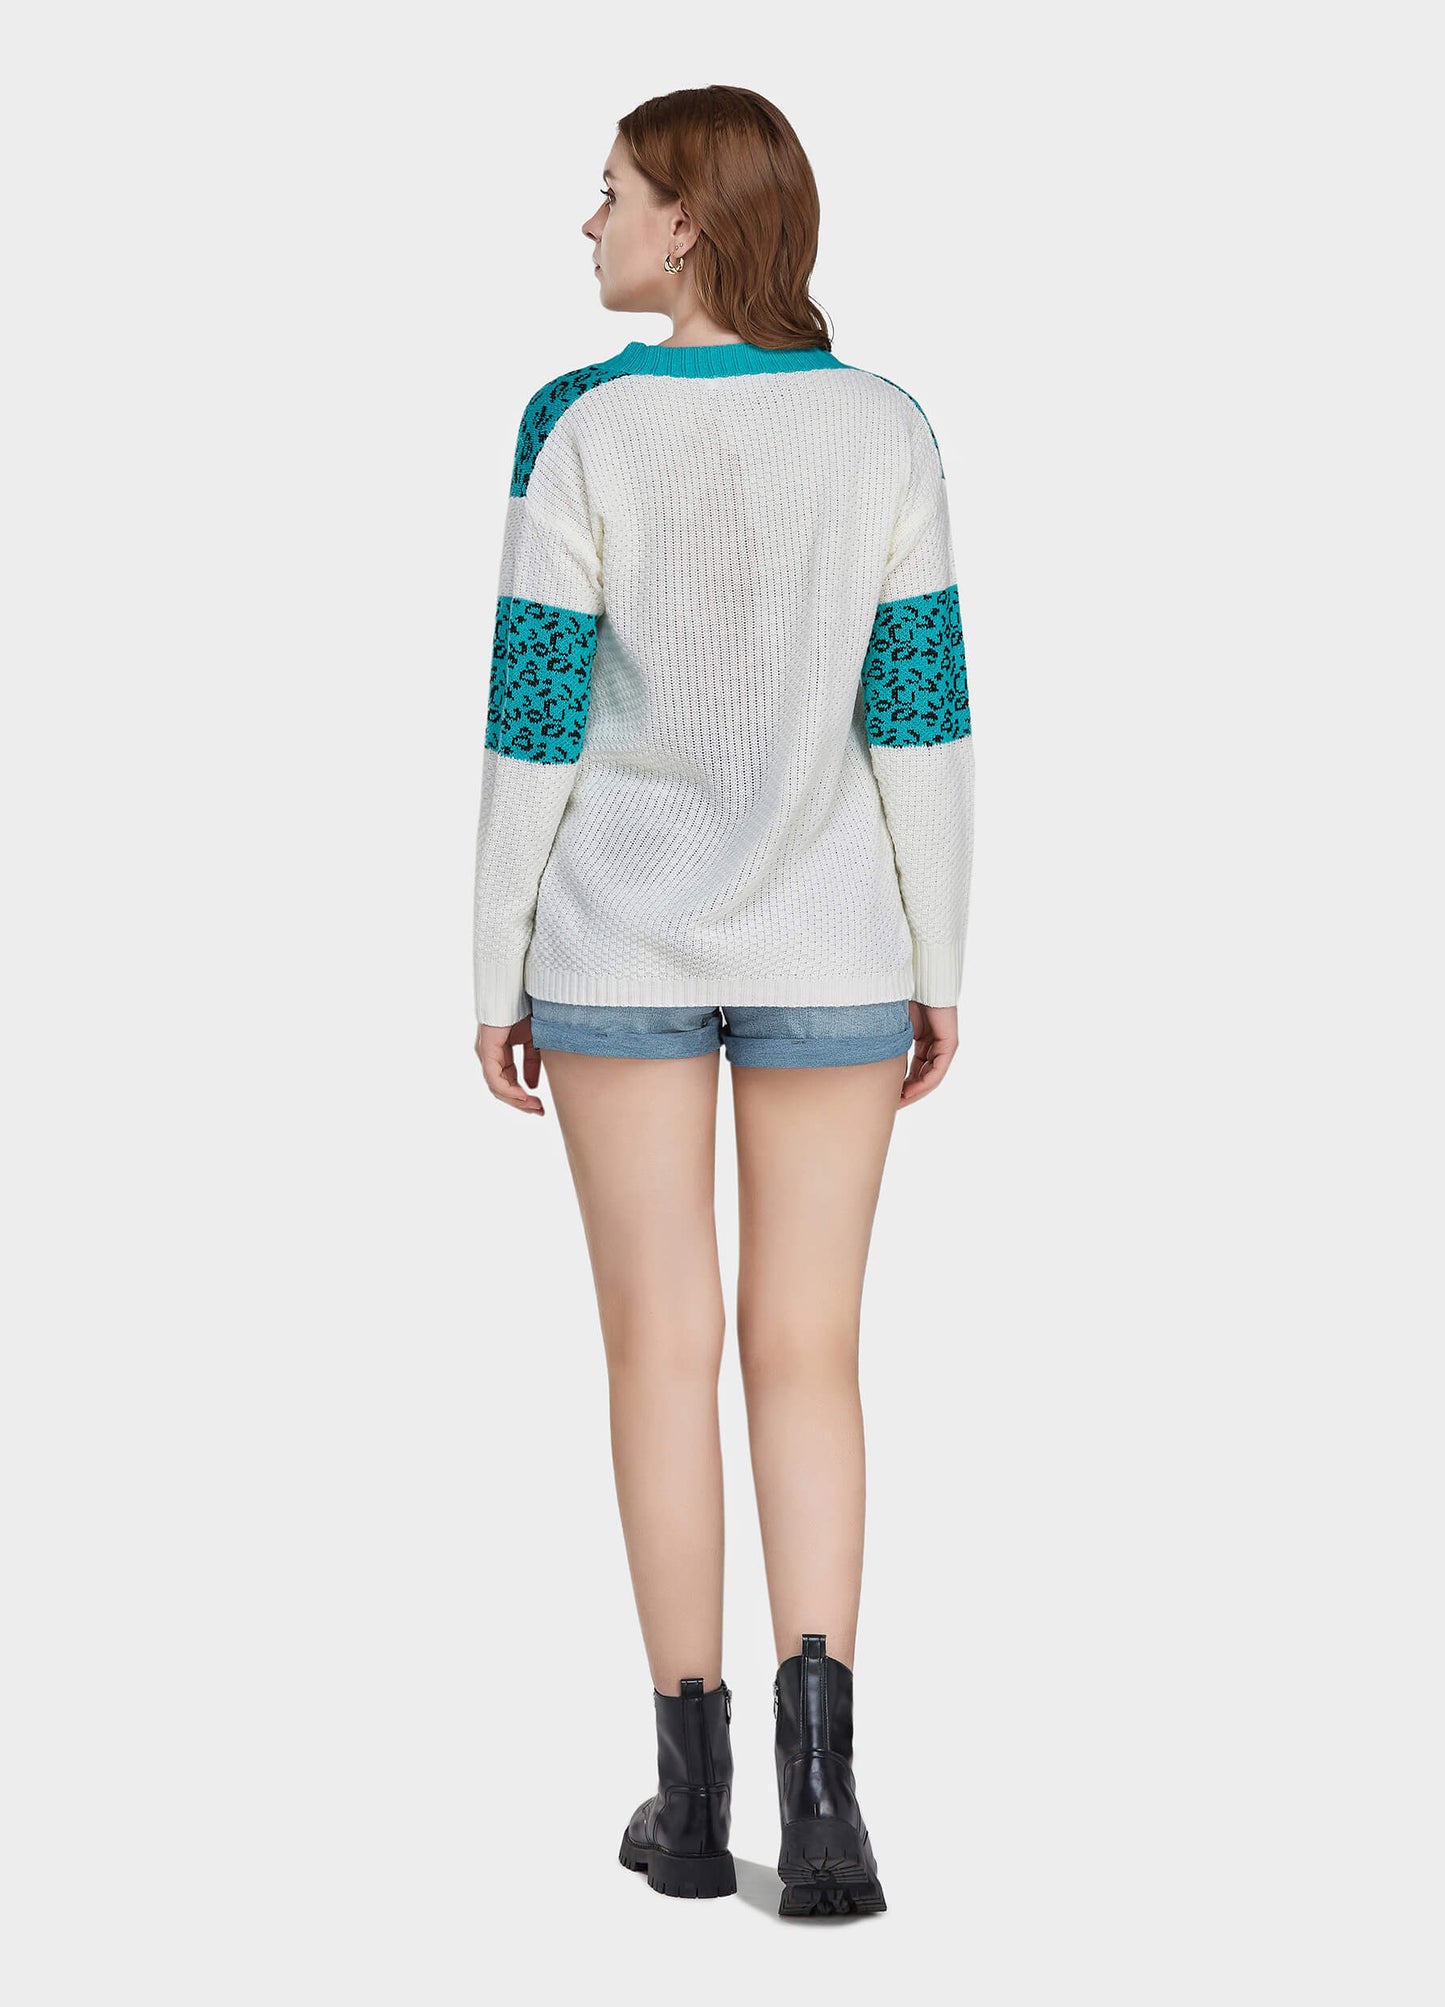 MECALA Women's V-Neck Leopard Print Long Sleeve Sweater-Light Blue back view